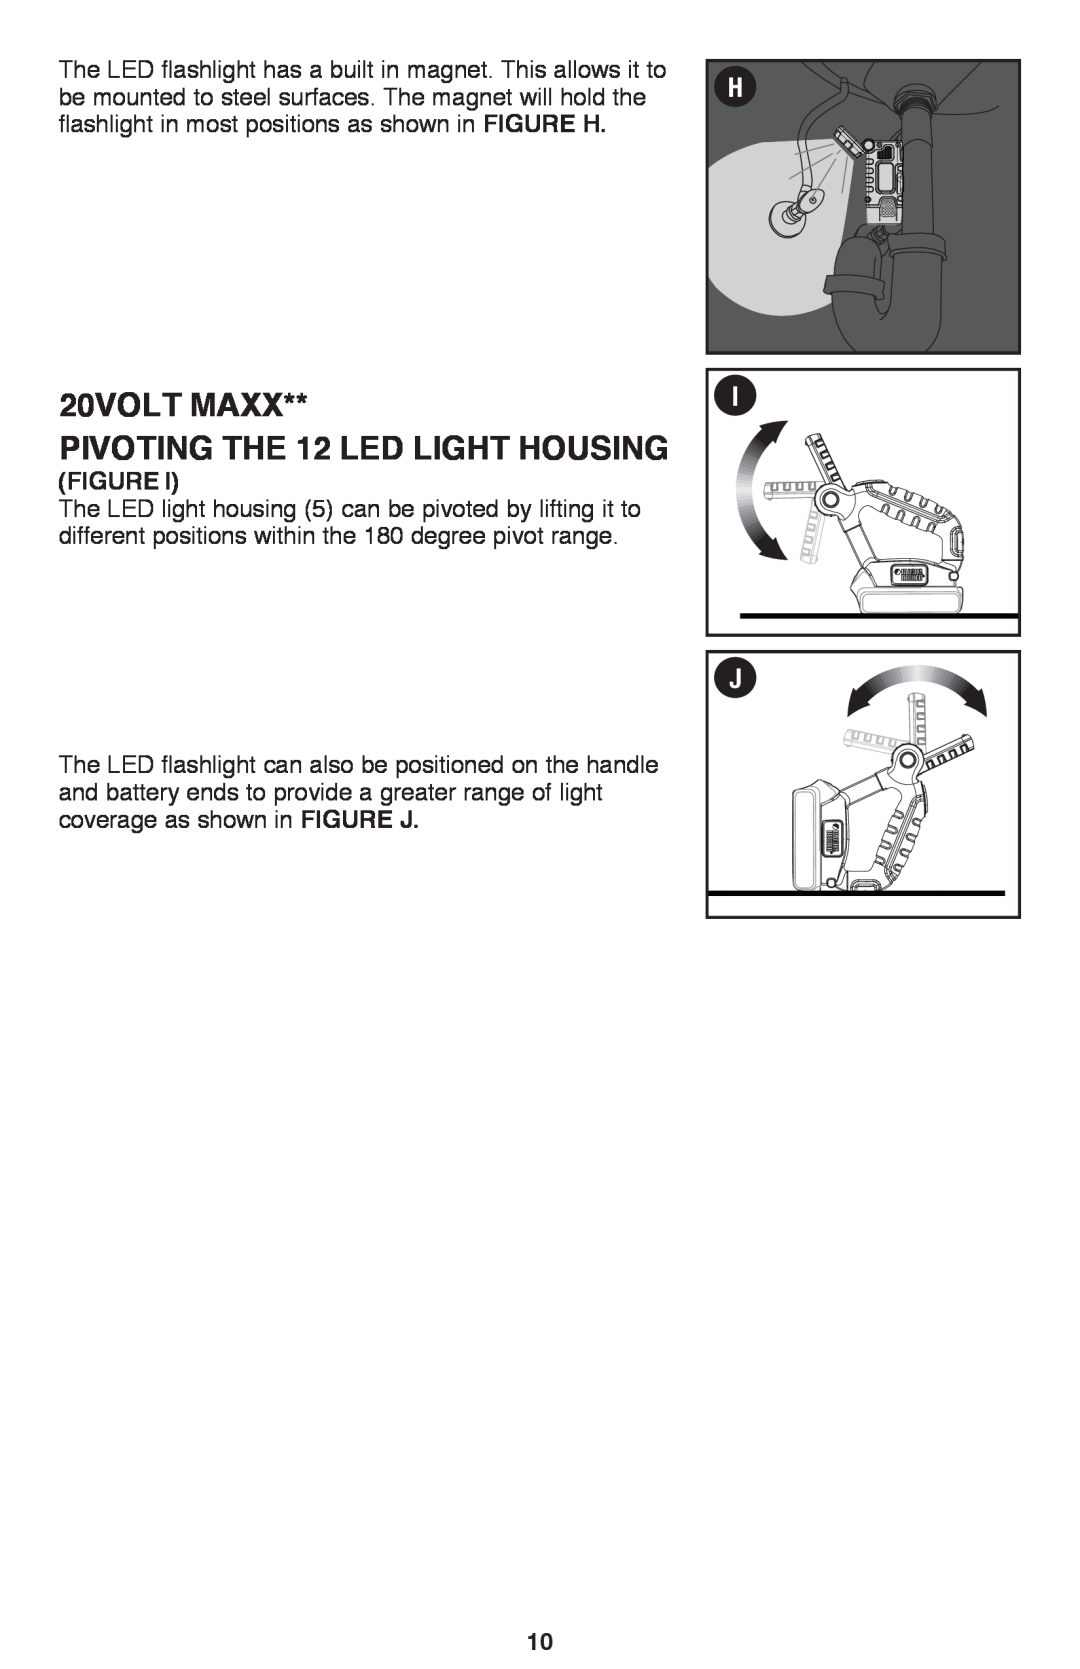 Black & Decker BDCF20, BDCF12 manual 20VOLT MAXX pivoting the 12 LED light housing 